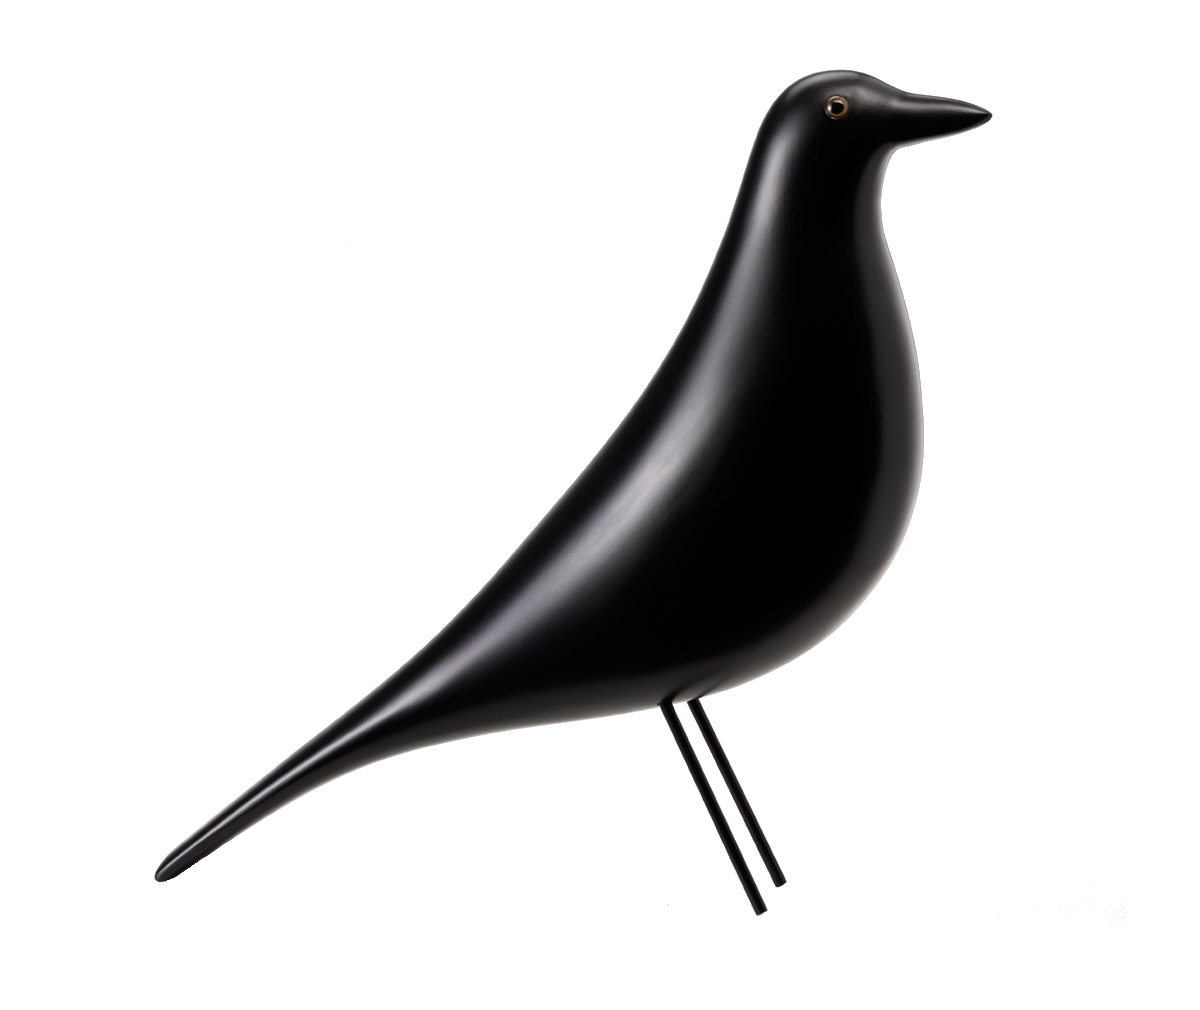 Vitra Eames House Bird Black